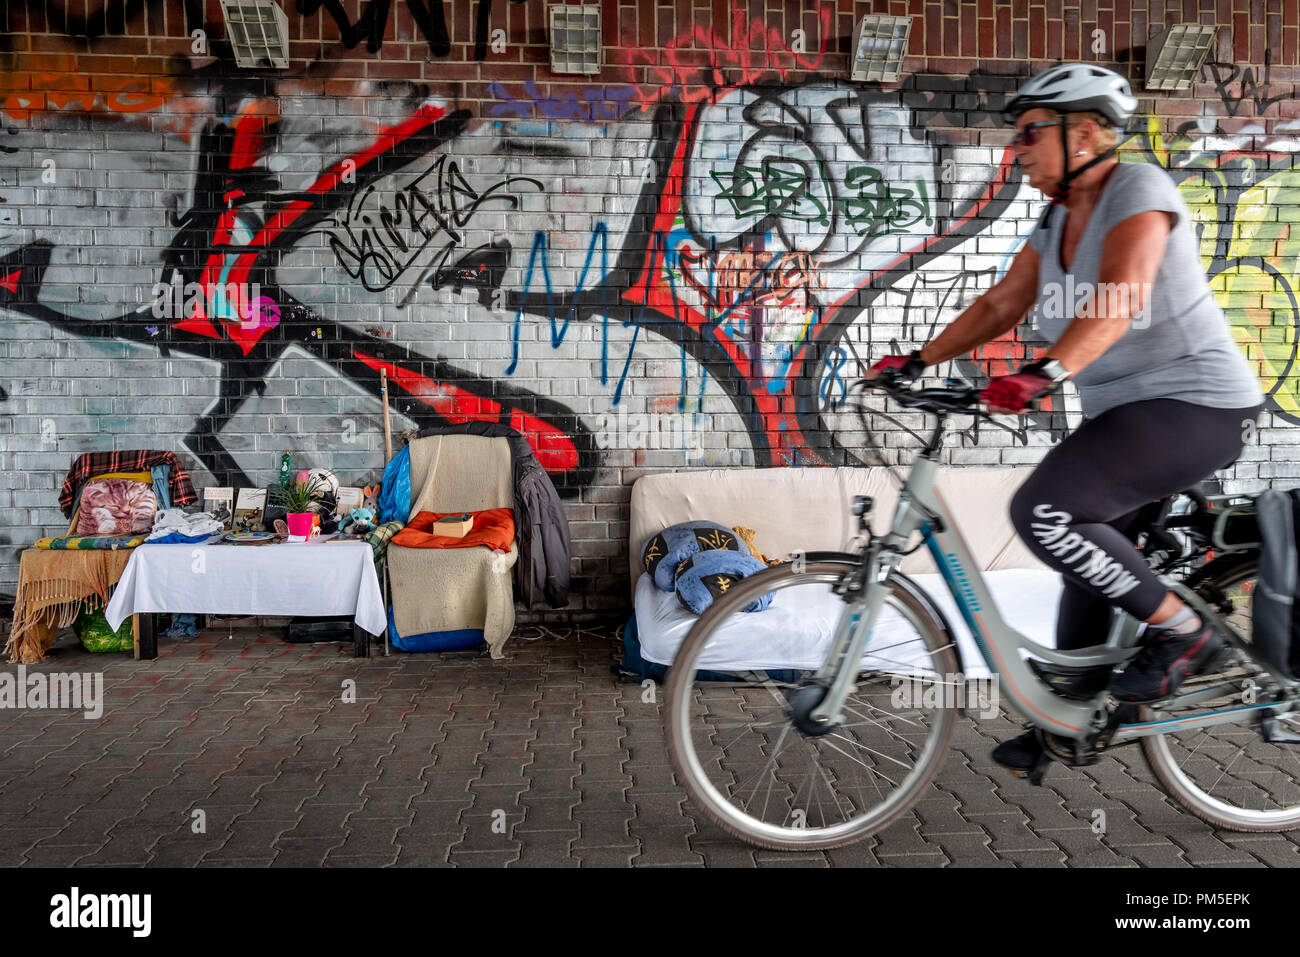 Homeless camp under a bridge in northern Berlin Stock Photo